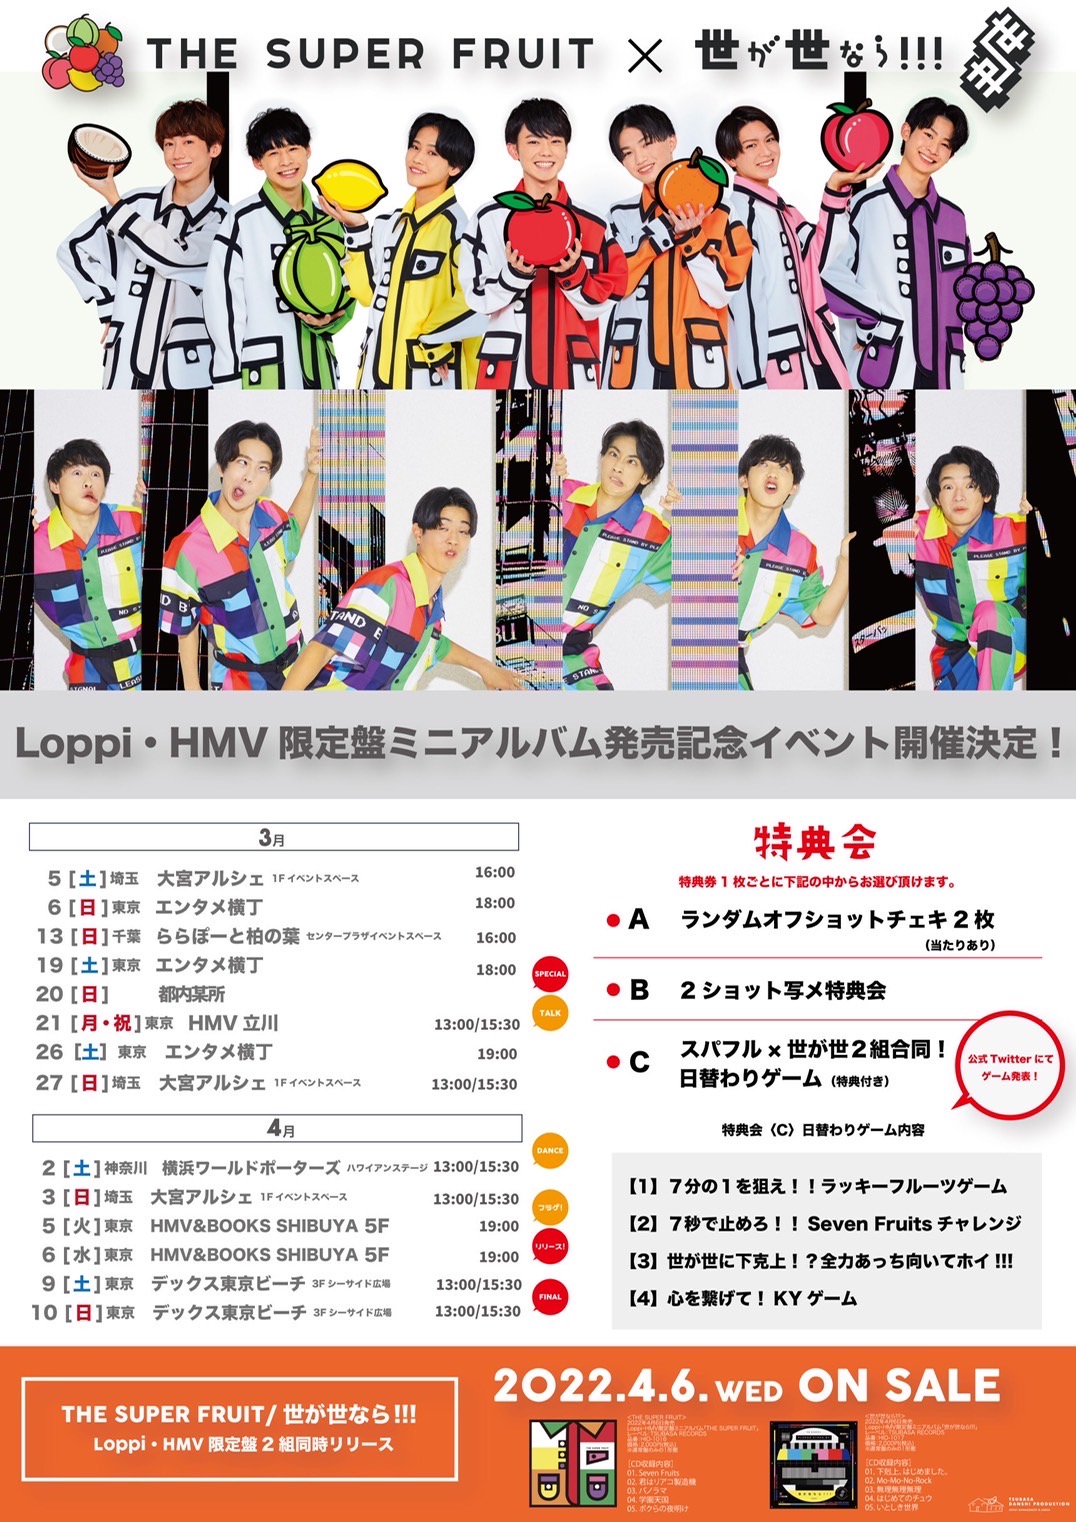 【NEWS】4/6発売 Loppi・HMV限定盤ミニアルバムの発売記念イベント 日程変更(3/12)と会場発表(4/9)のお知らせ